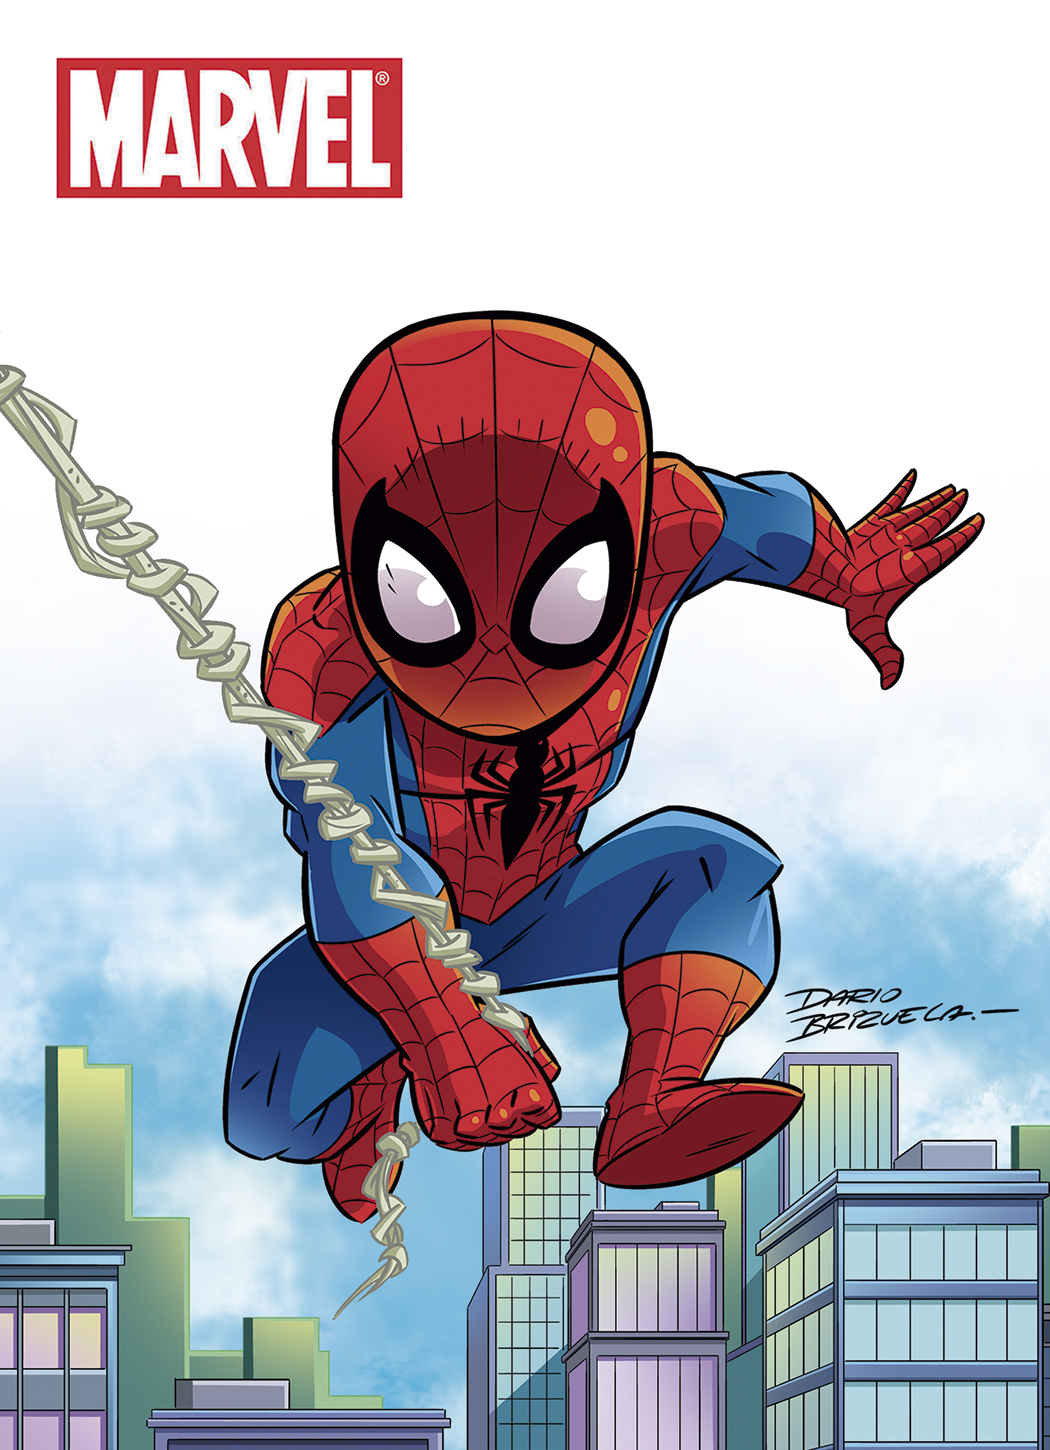 Spider-Man Marvel Super Hero Adventures